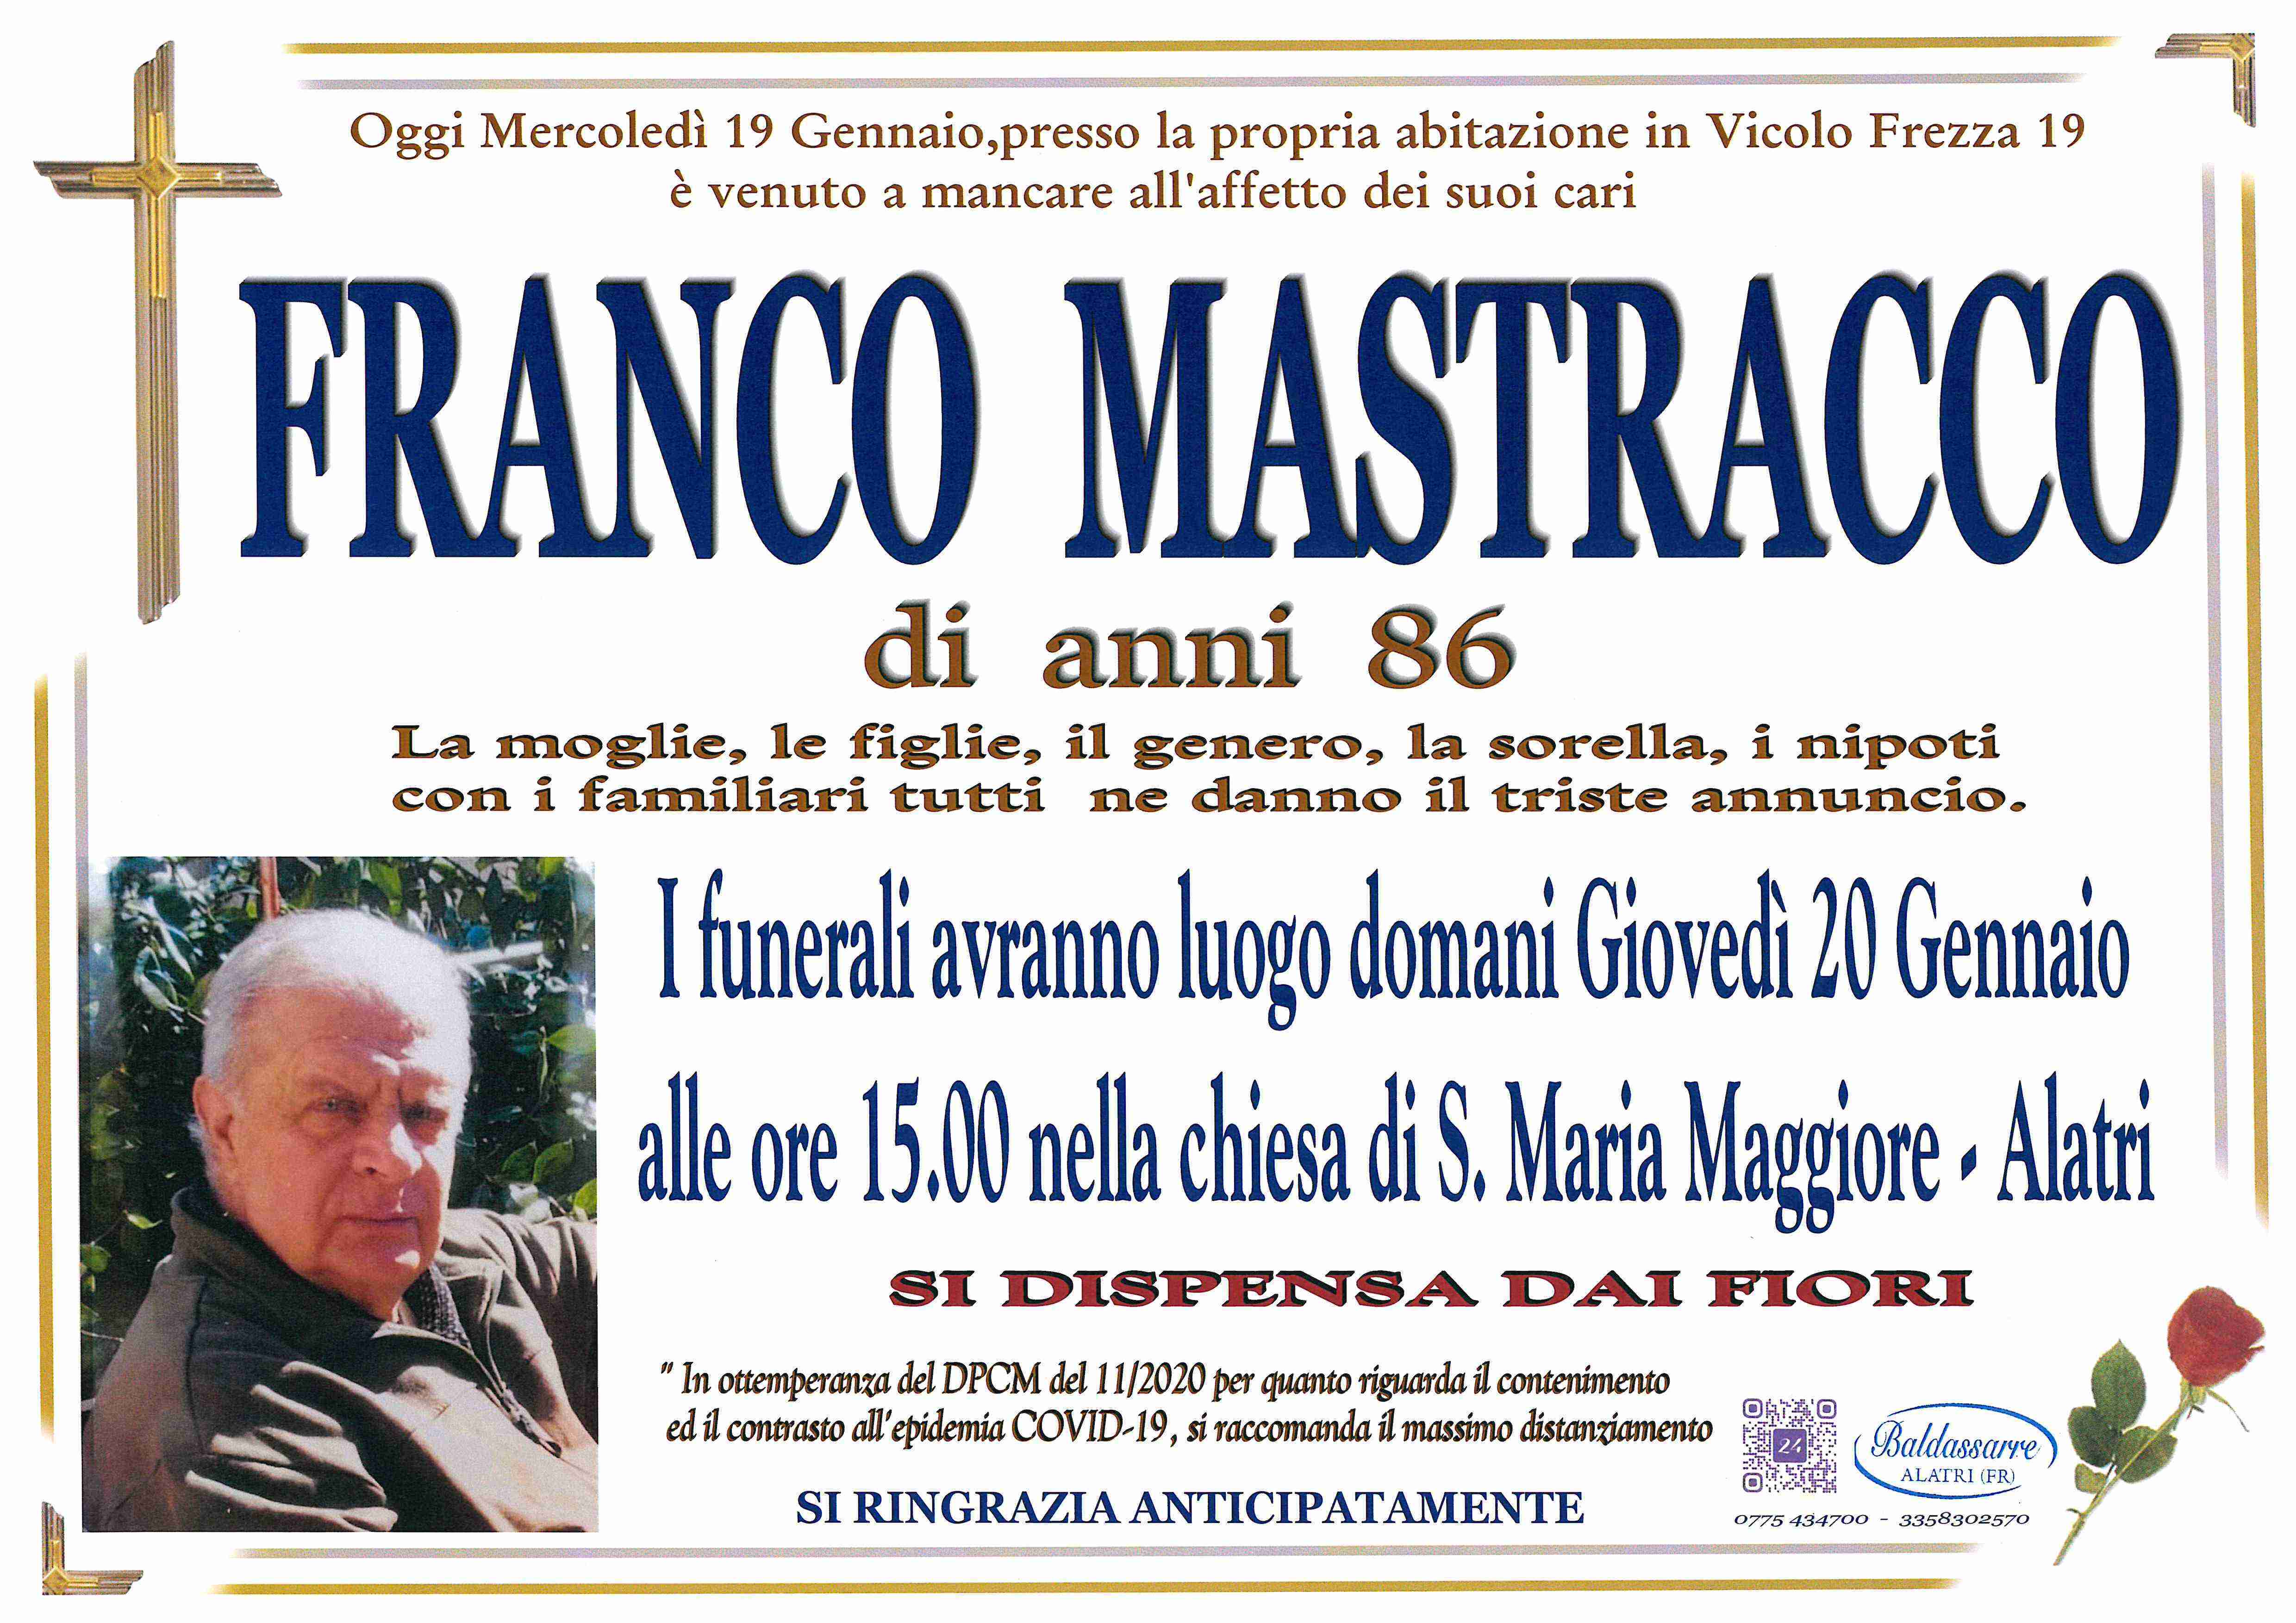 Franco Mastracco